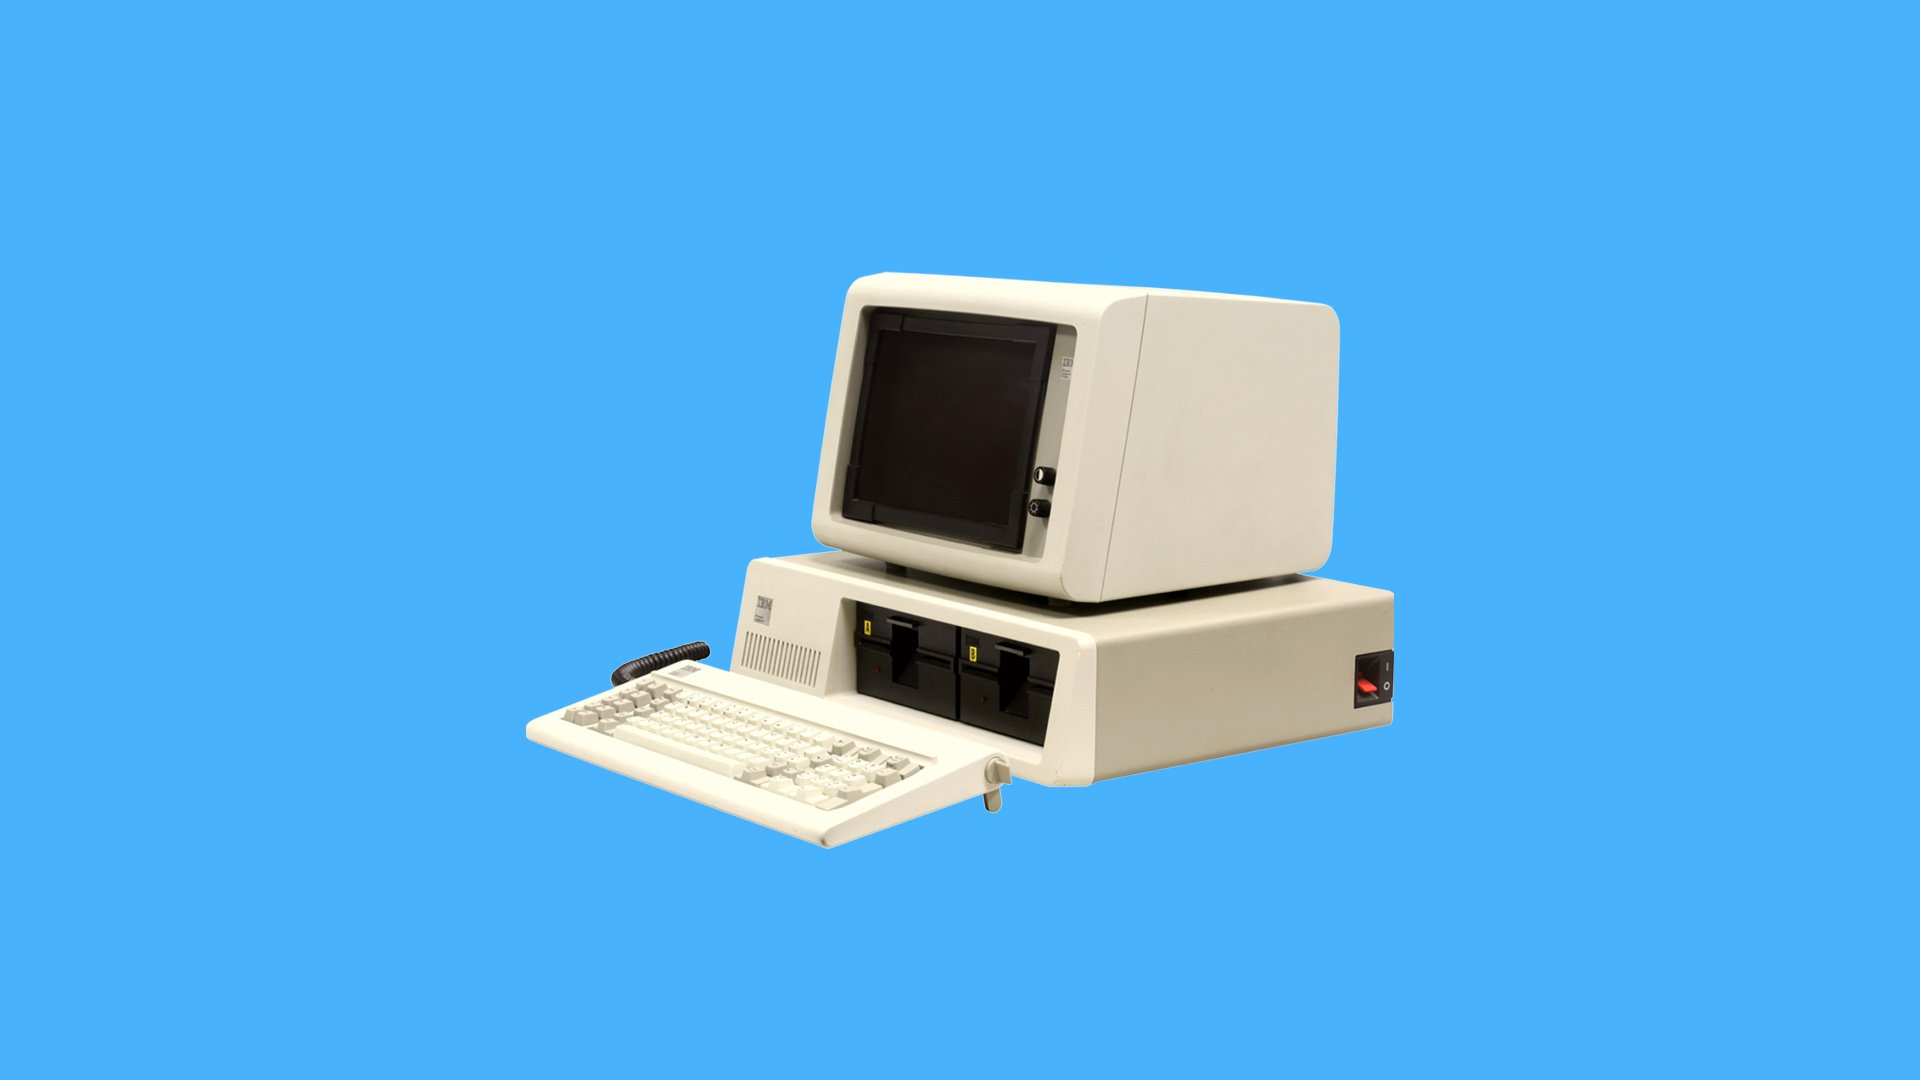 Spec Showdown: The Original IBM 5150 vs. Today's PCs